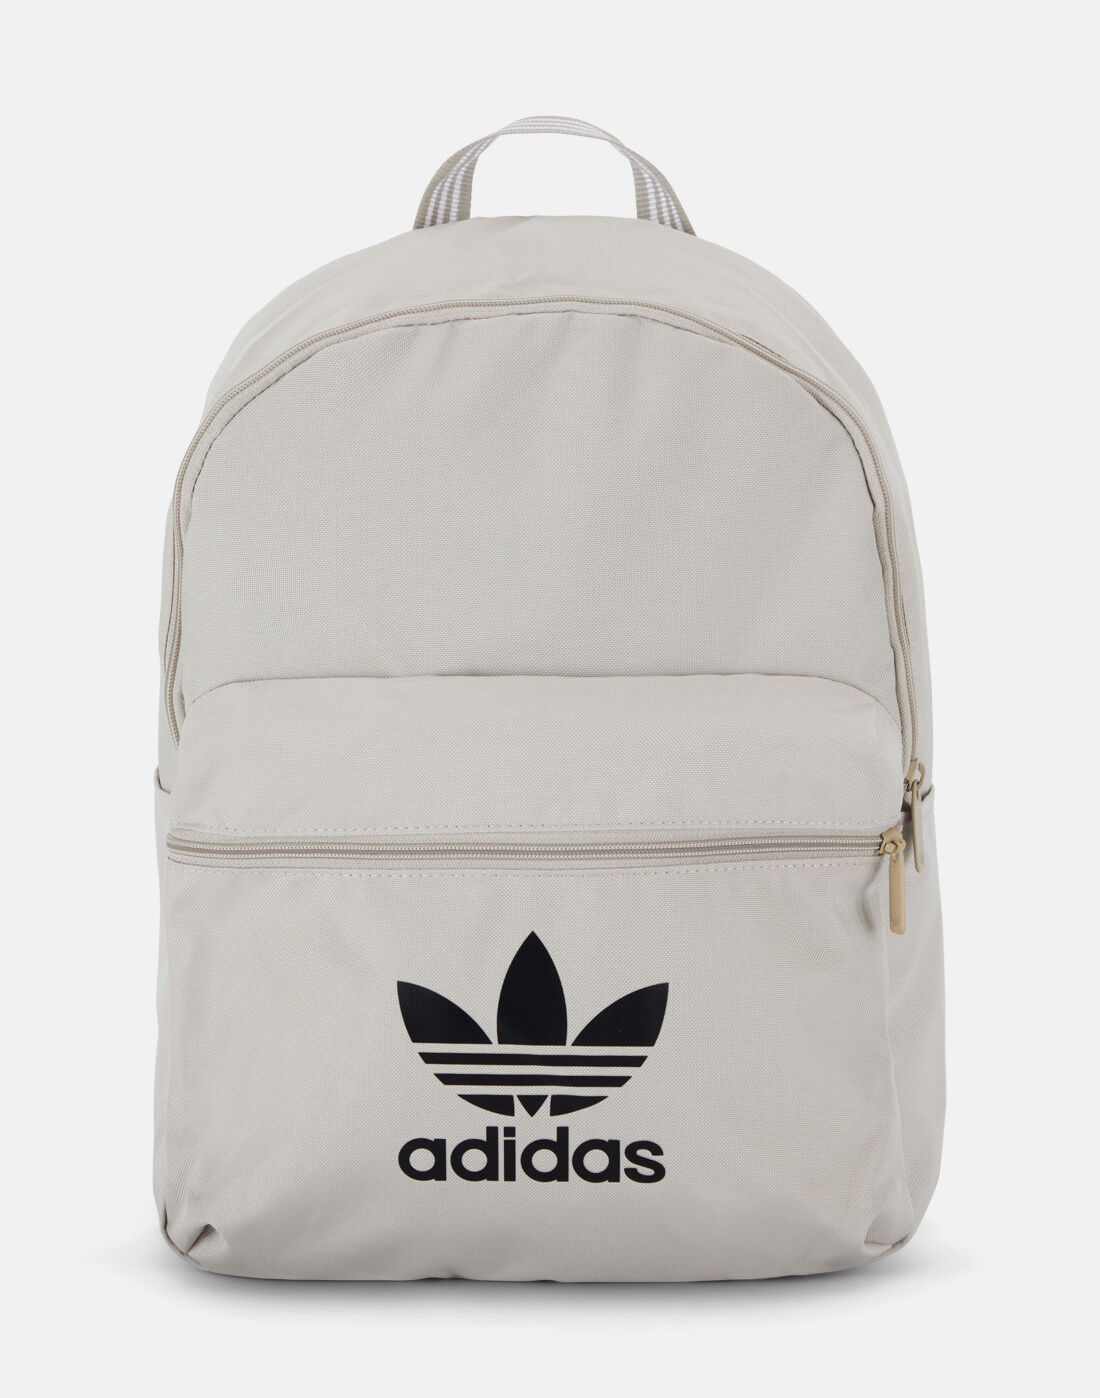 Adidas Outdoor Sport Backpack Large Fashion Travel Bag | Lazada PH